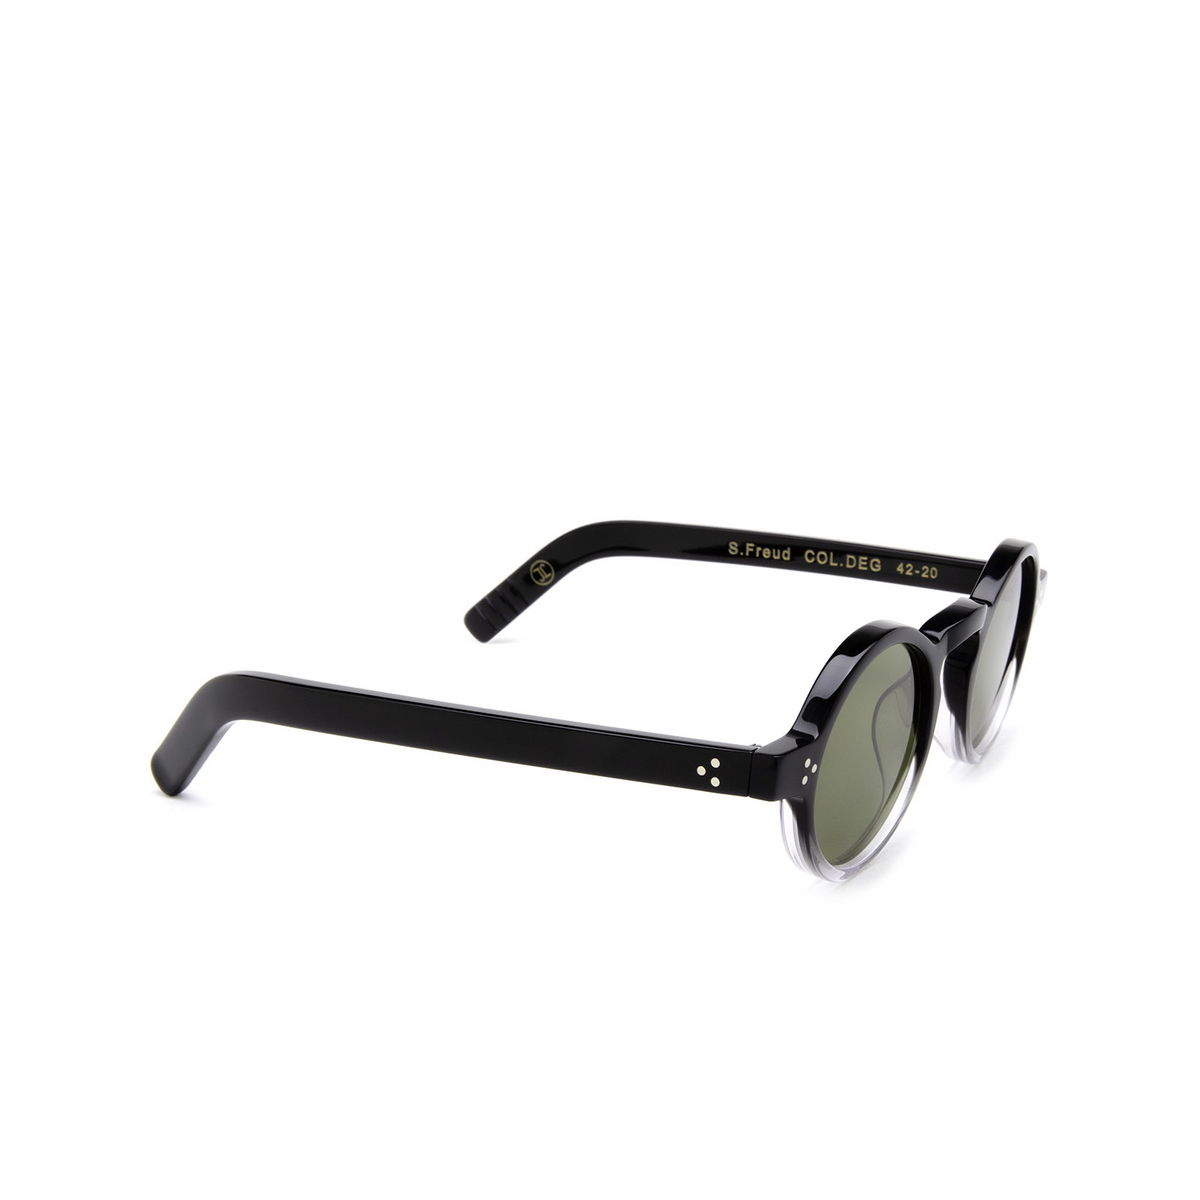 Lesca S.FREUD Sunglasses DEG Black Gradient - three-quarters view